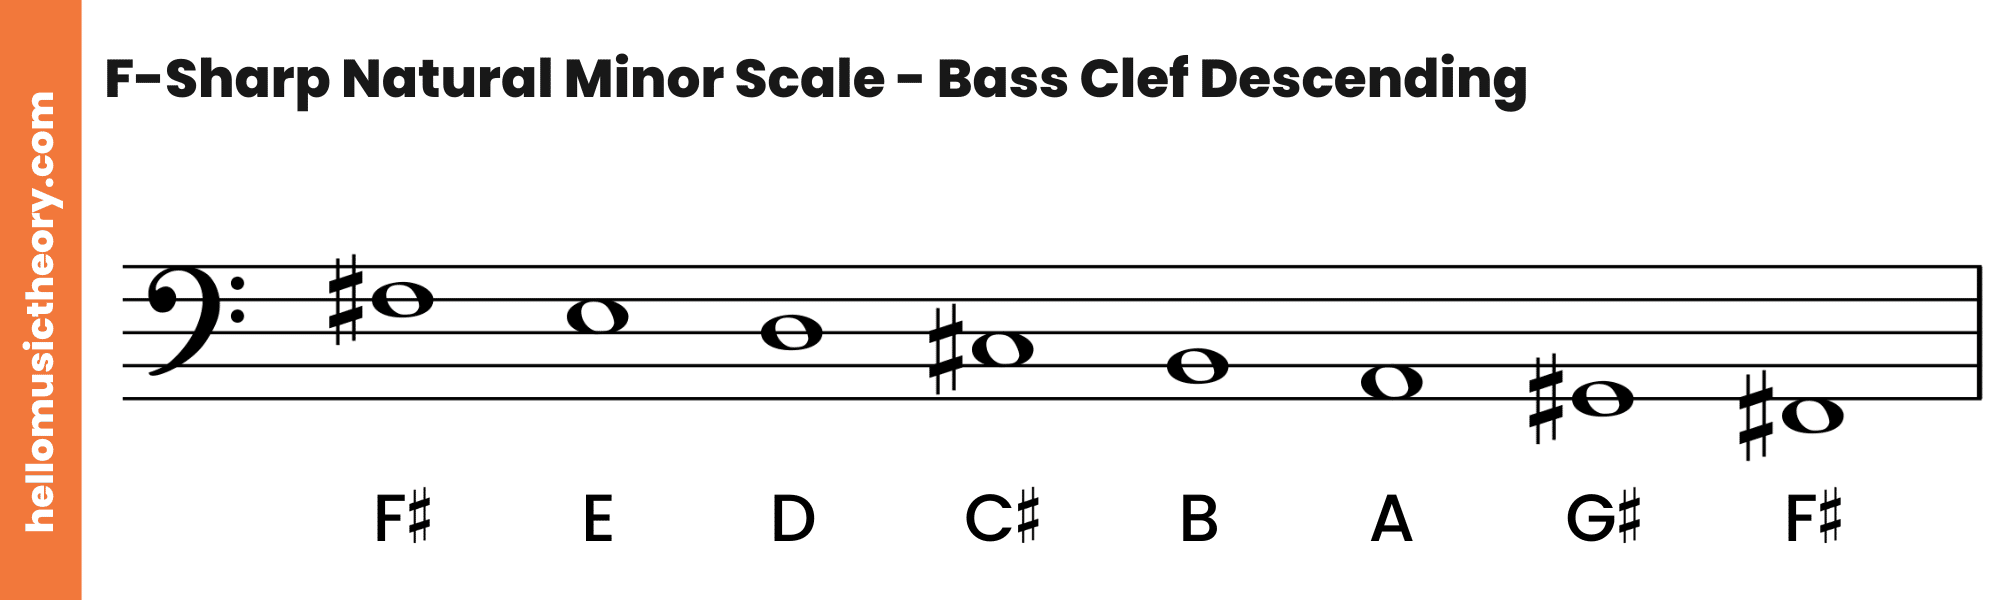 F-Sharp Natural Minor Scale Bass Clef Descending